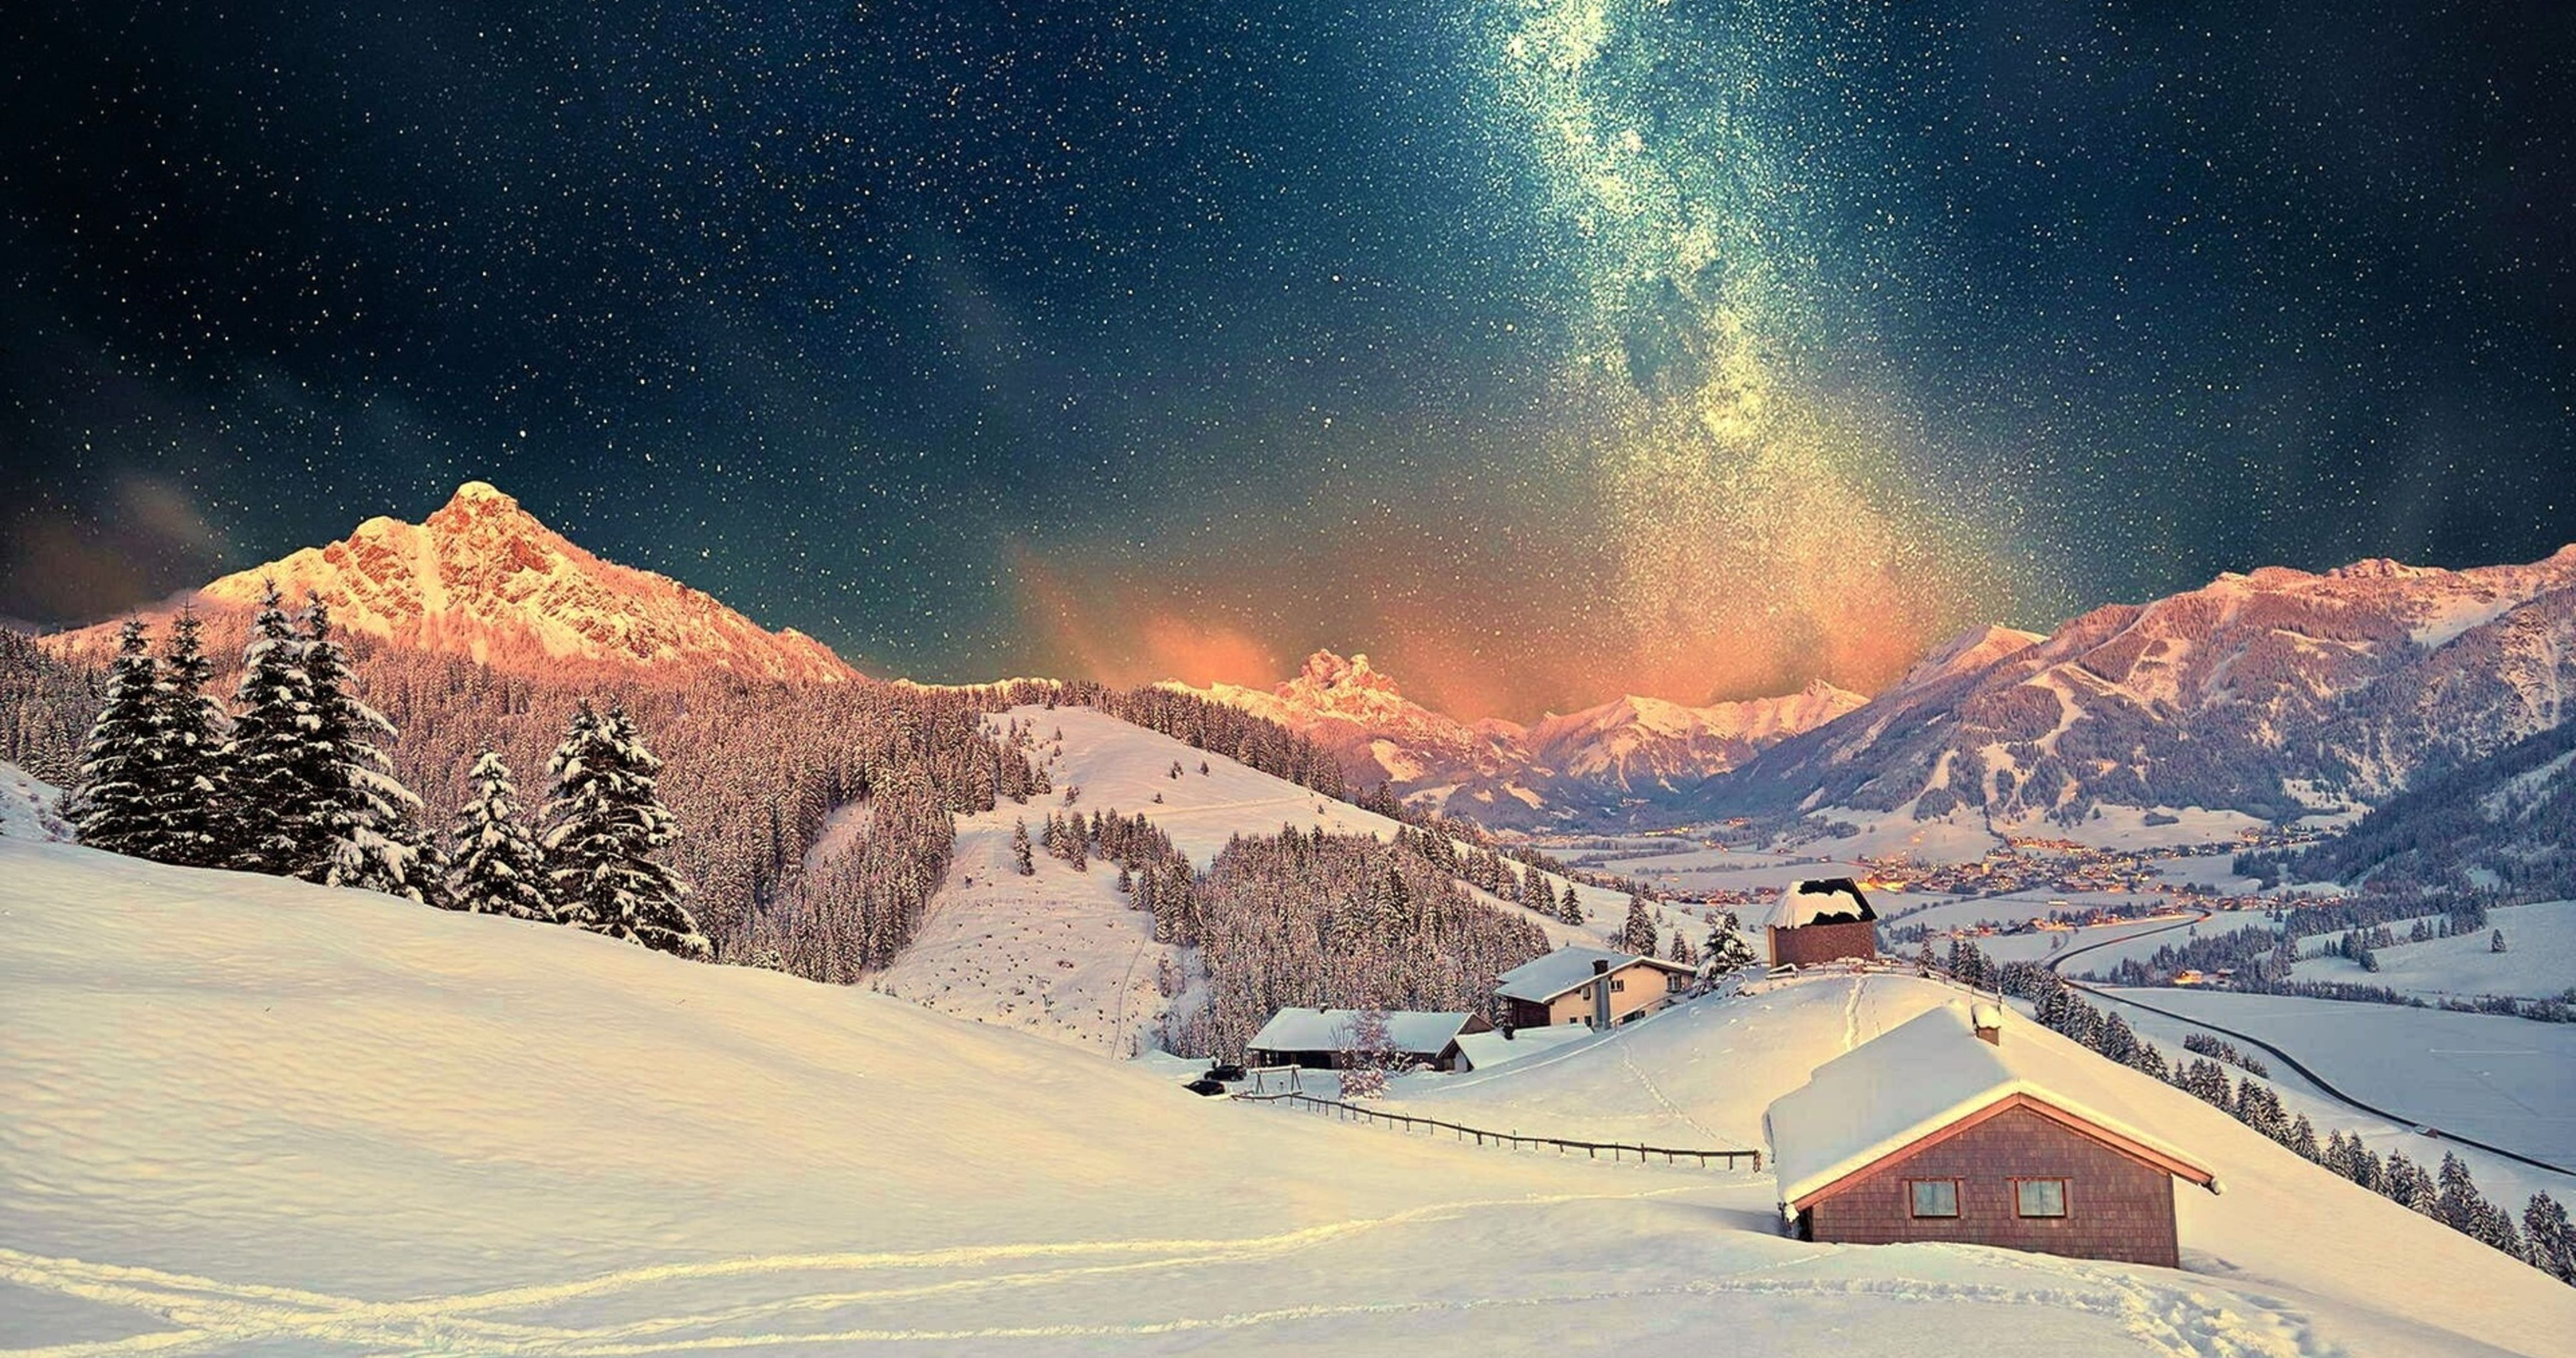 Milky way over the Tyrolean mountains. Lugares para visitar, Lugares